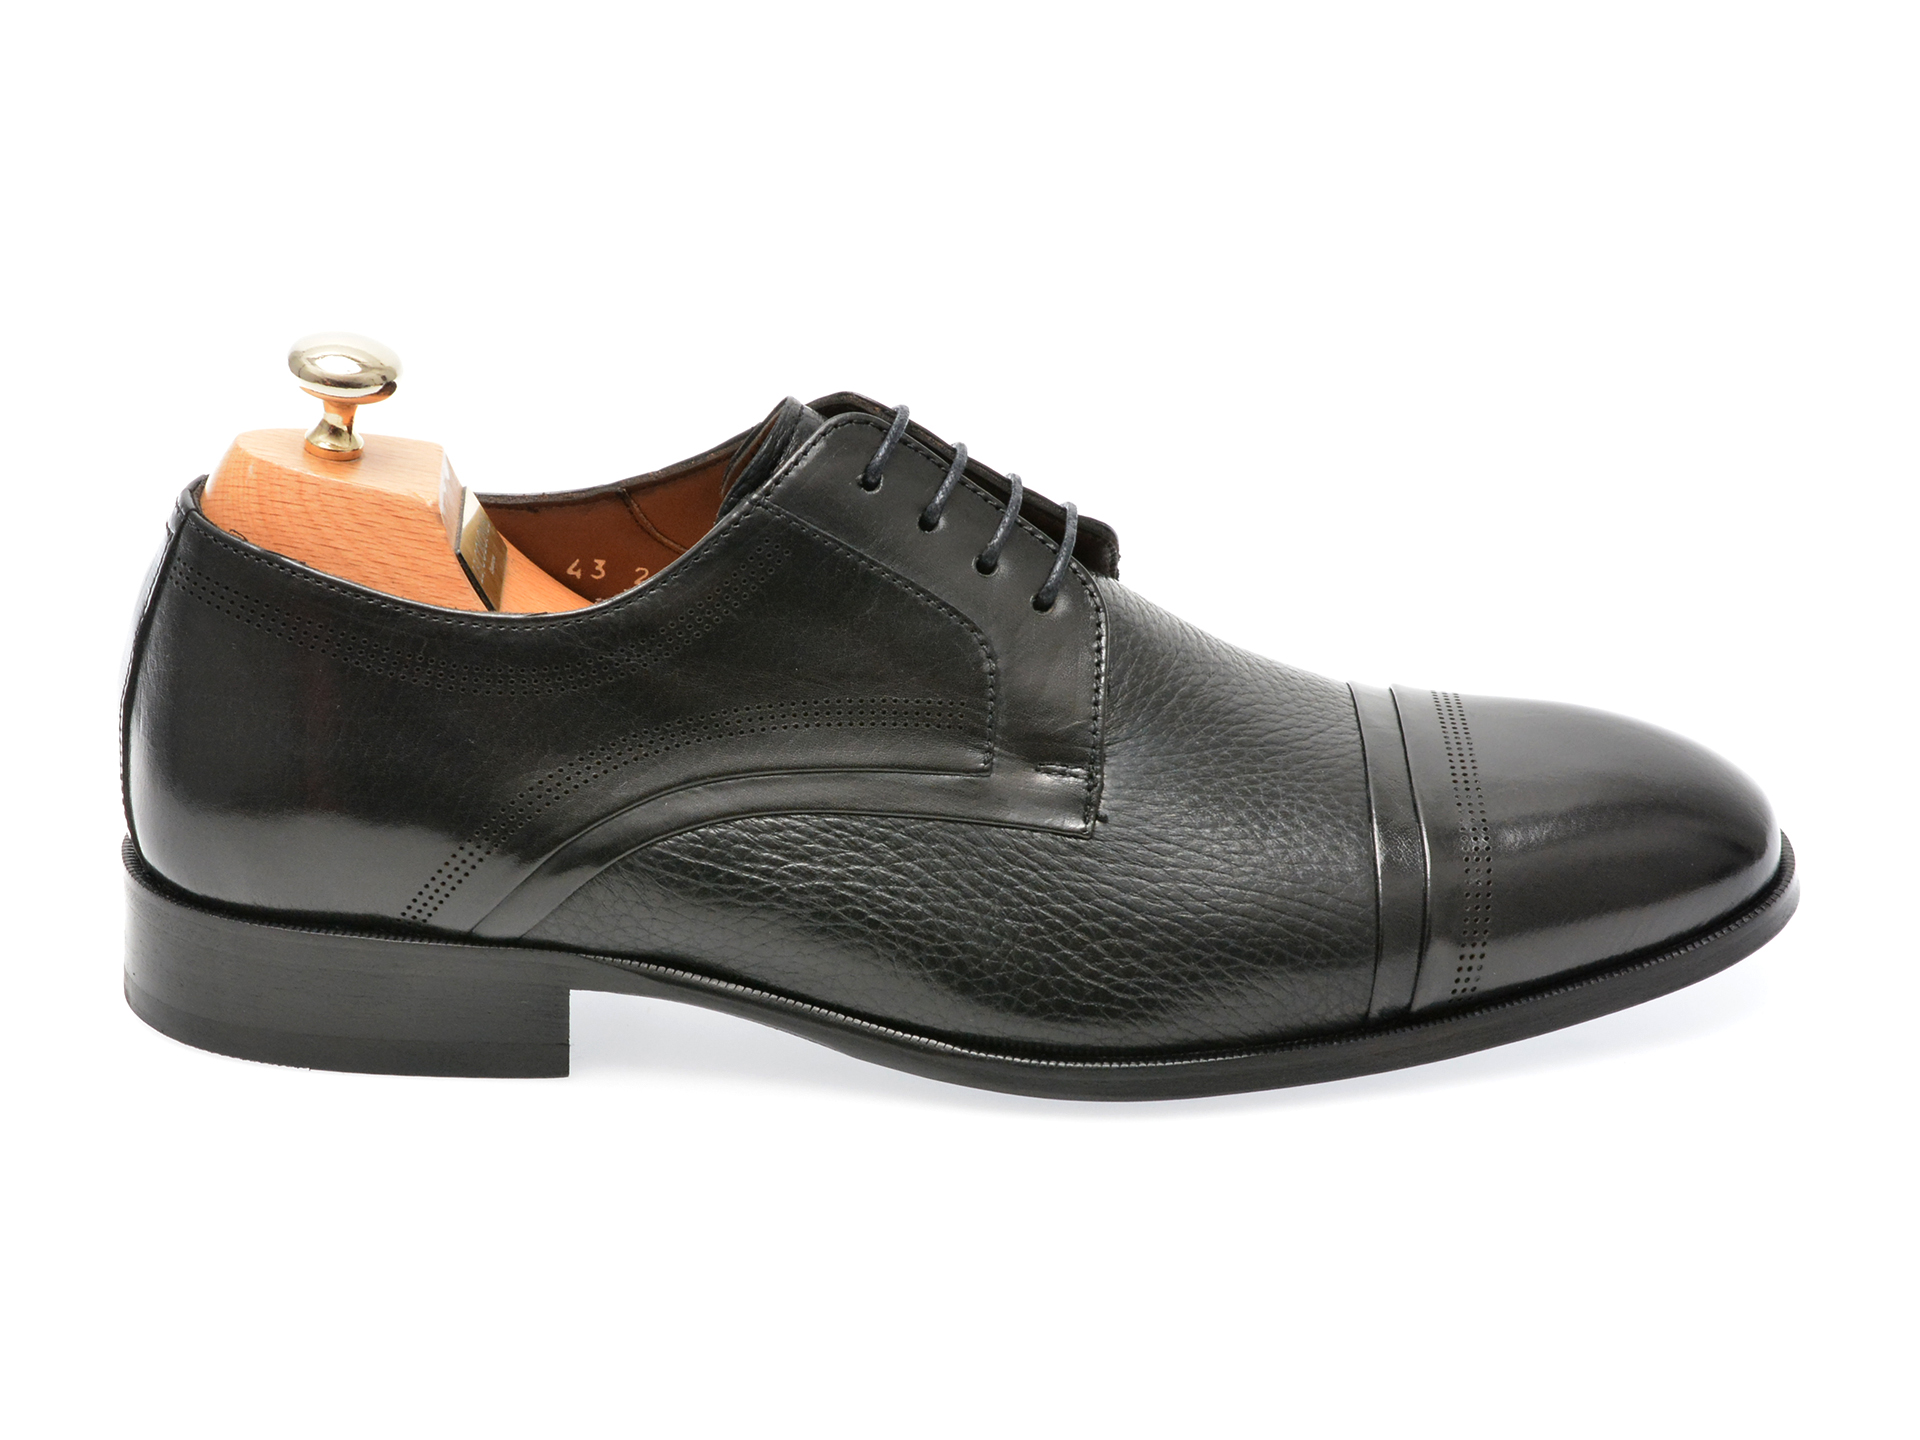 Pantofi LE COLONEL negri, 48470, din piele naturala